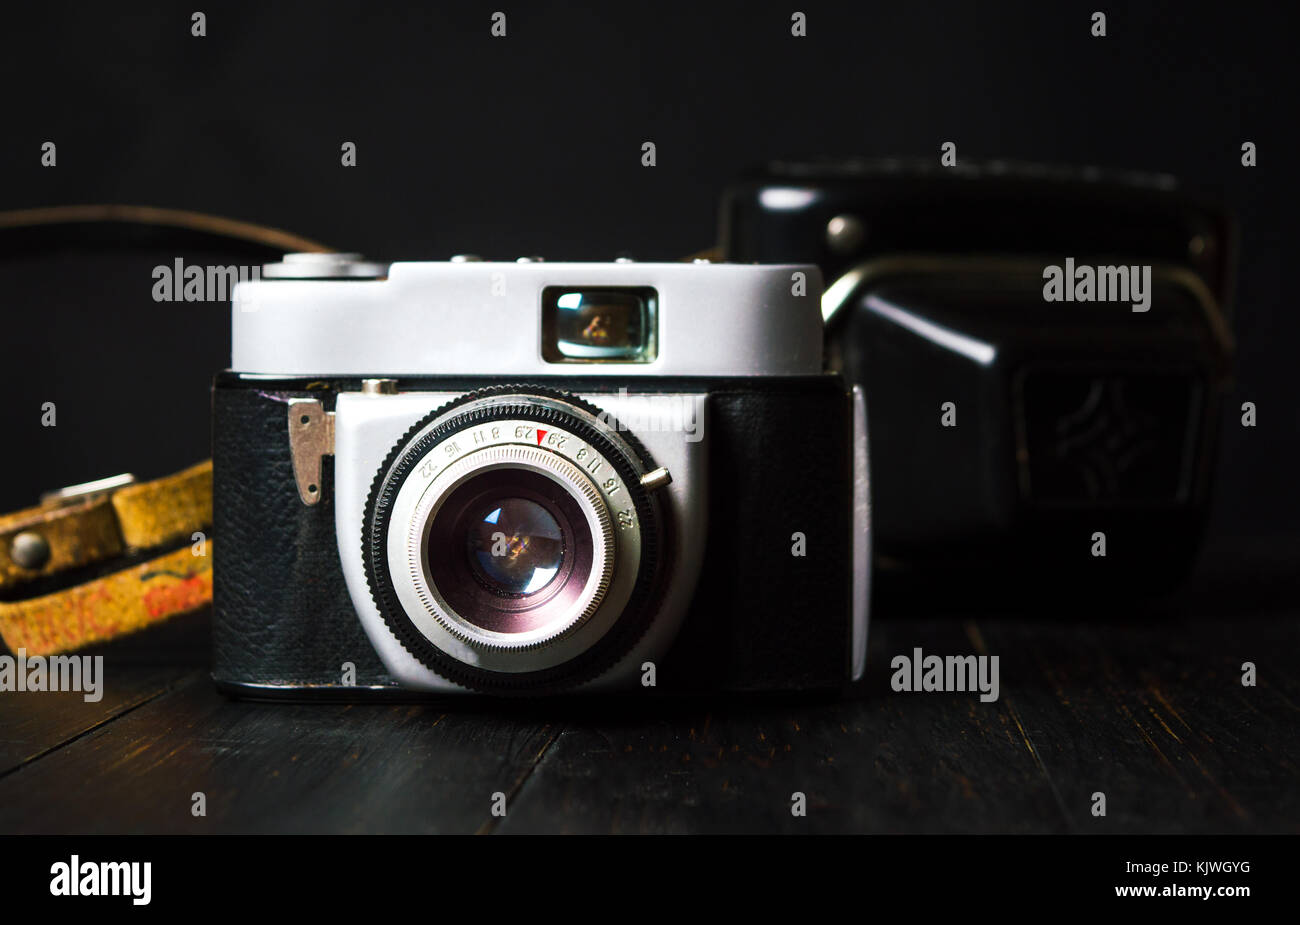 Vintage film camera against dark background. Retro technology Stock Photo